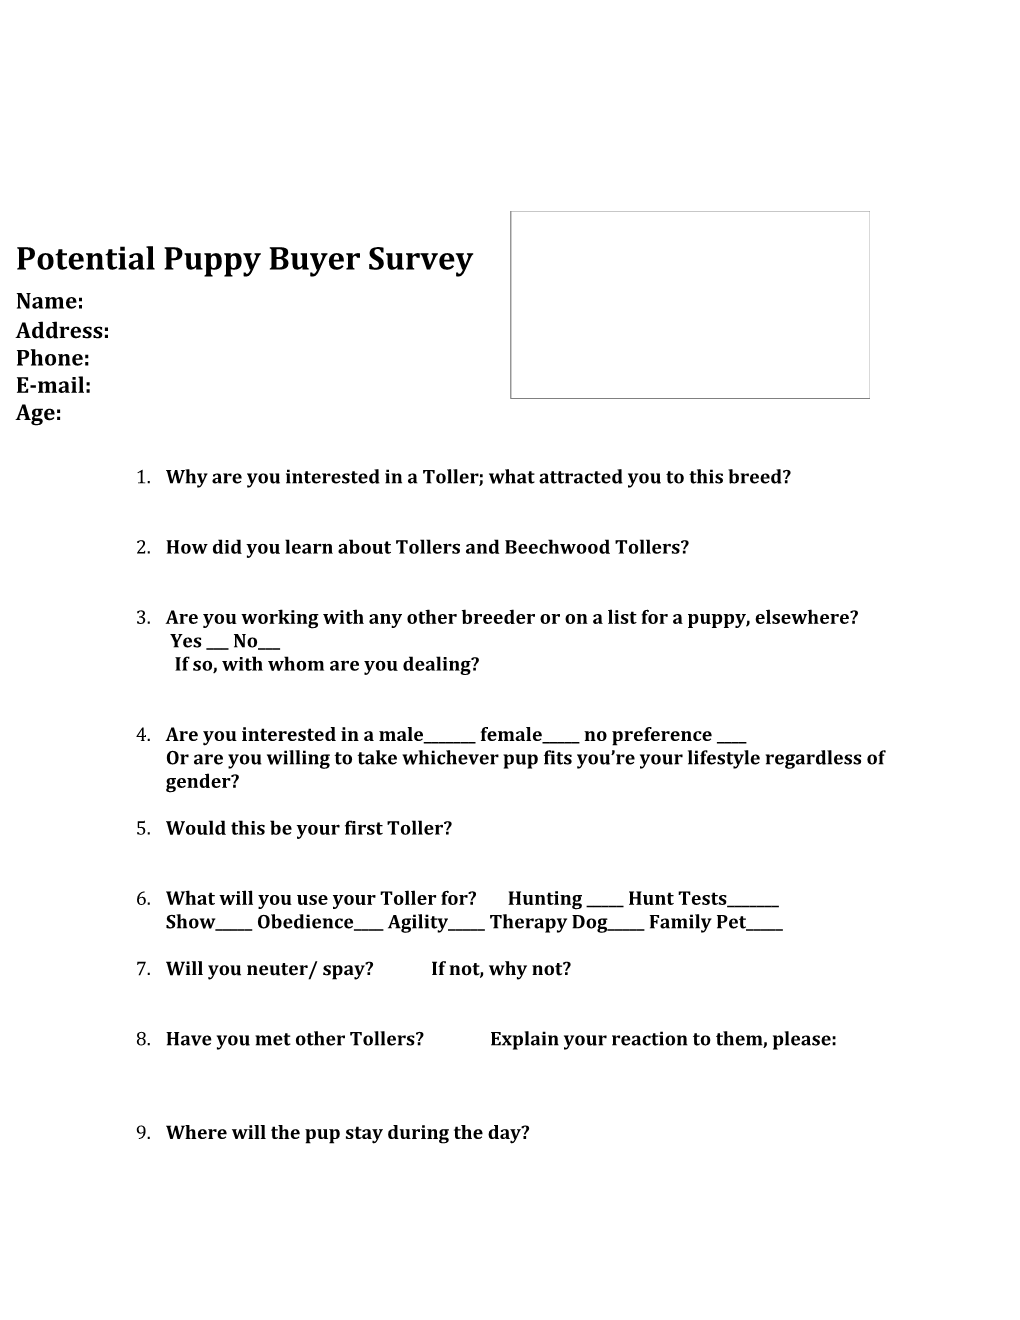 Potential Puppy Buyer Survey